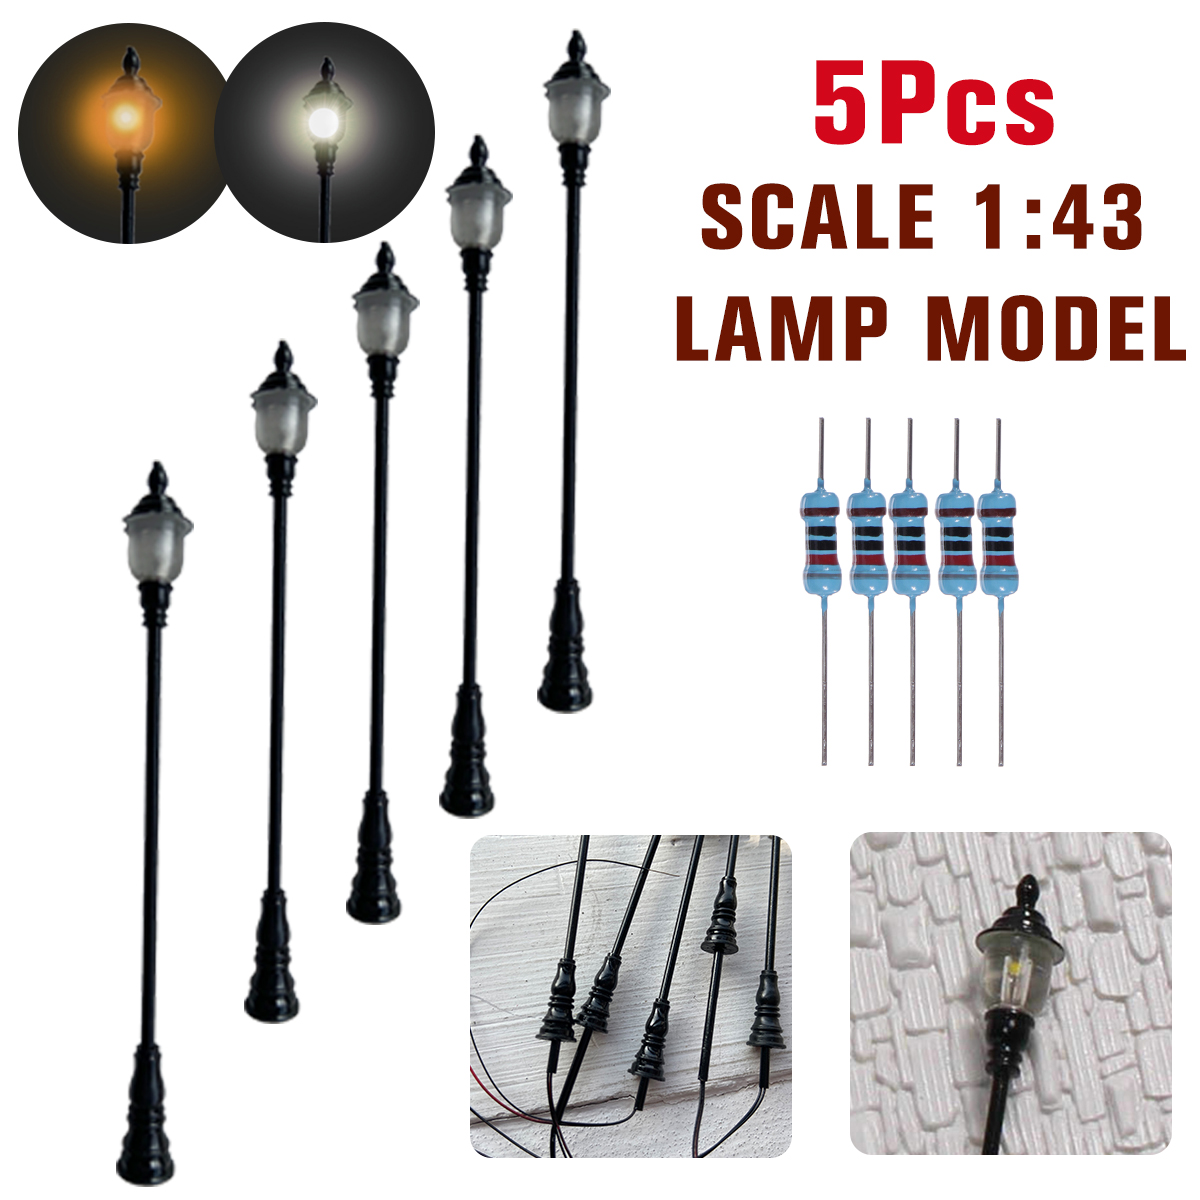 

5Pcs/Set 1:43 HO Scale LED Model Post Street Light Railway Train Lamps